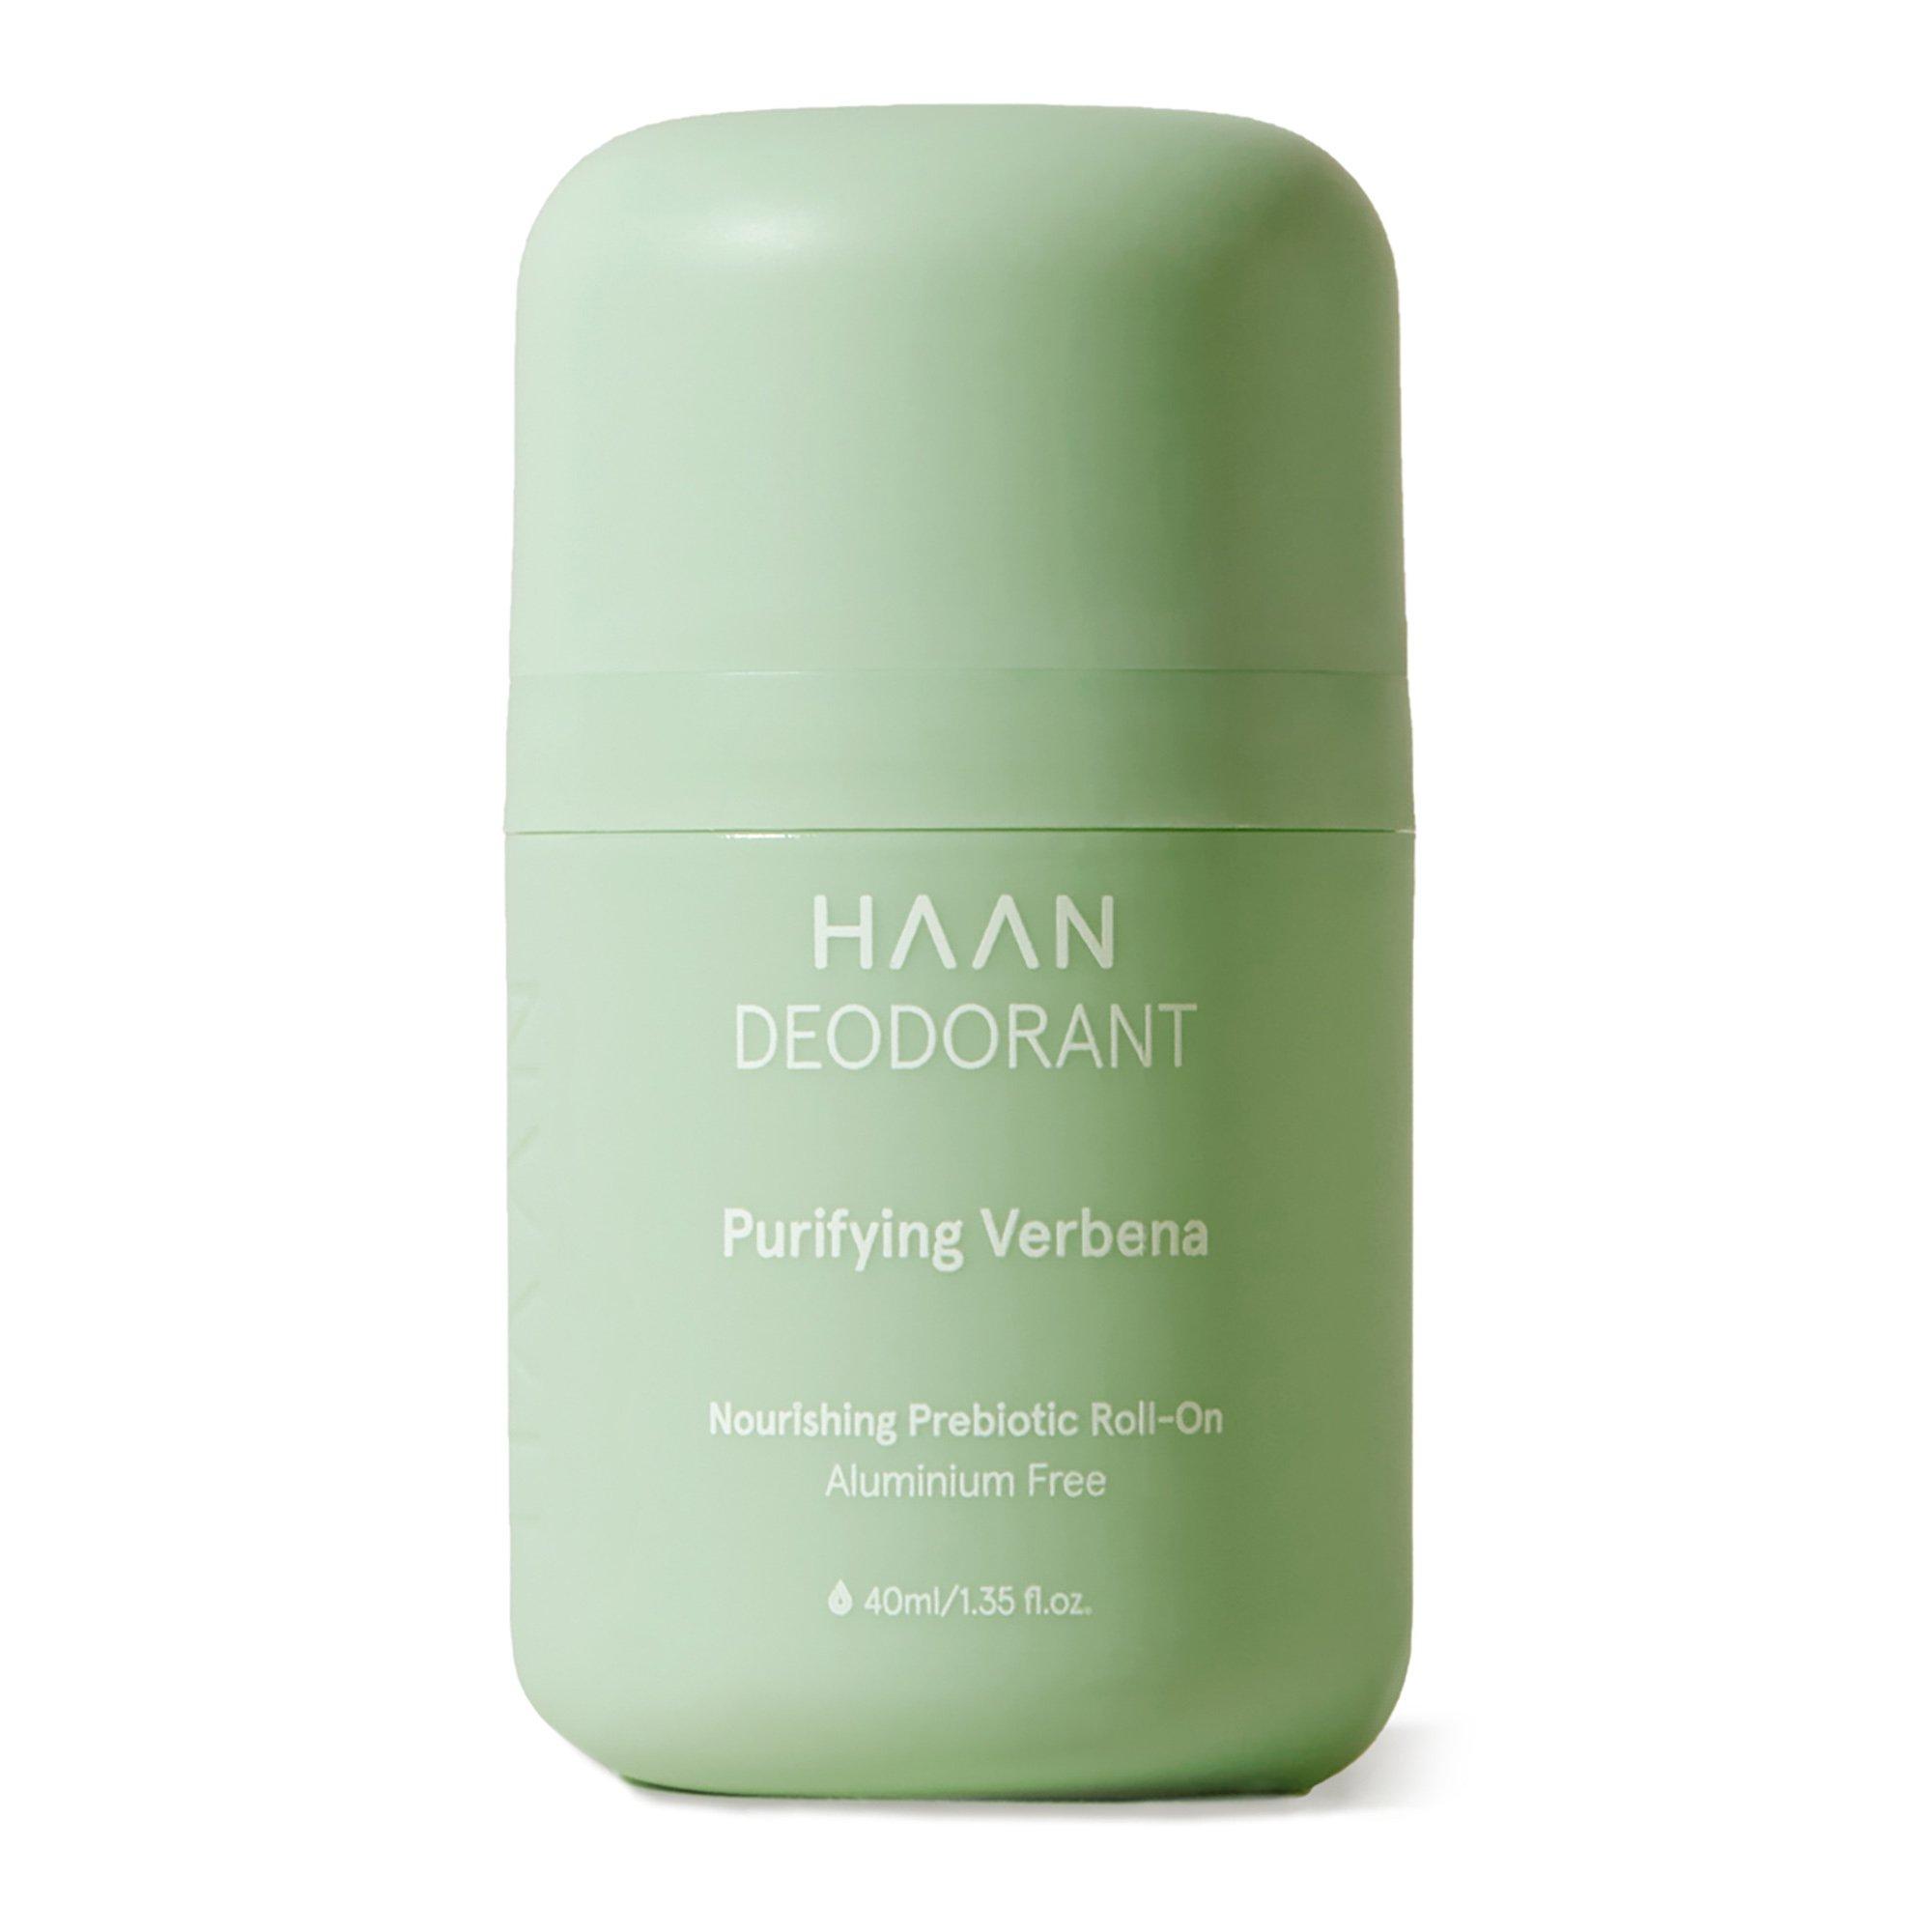 Image of HAAN Deodorant Purifying Verbena - 40ml